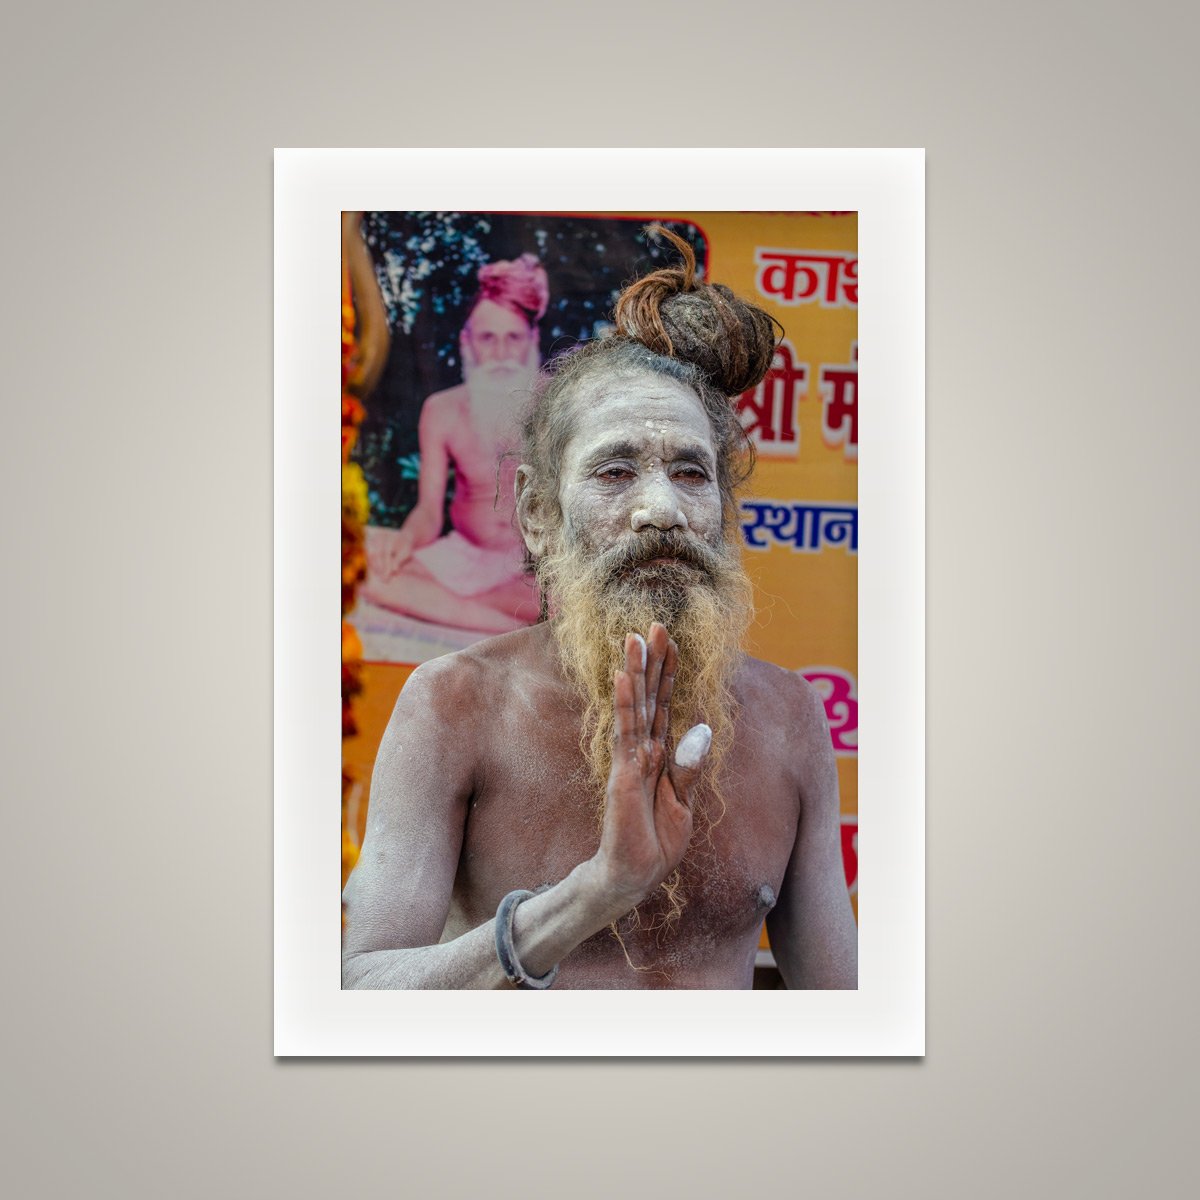 Naga Sadhu with Poster